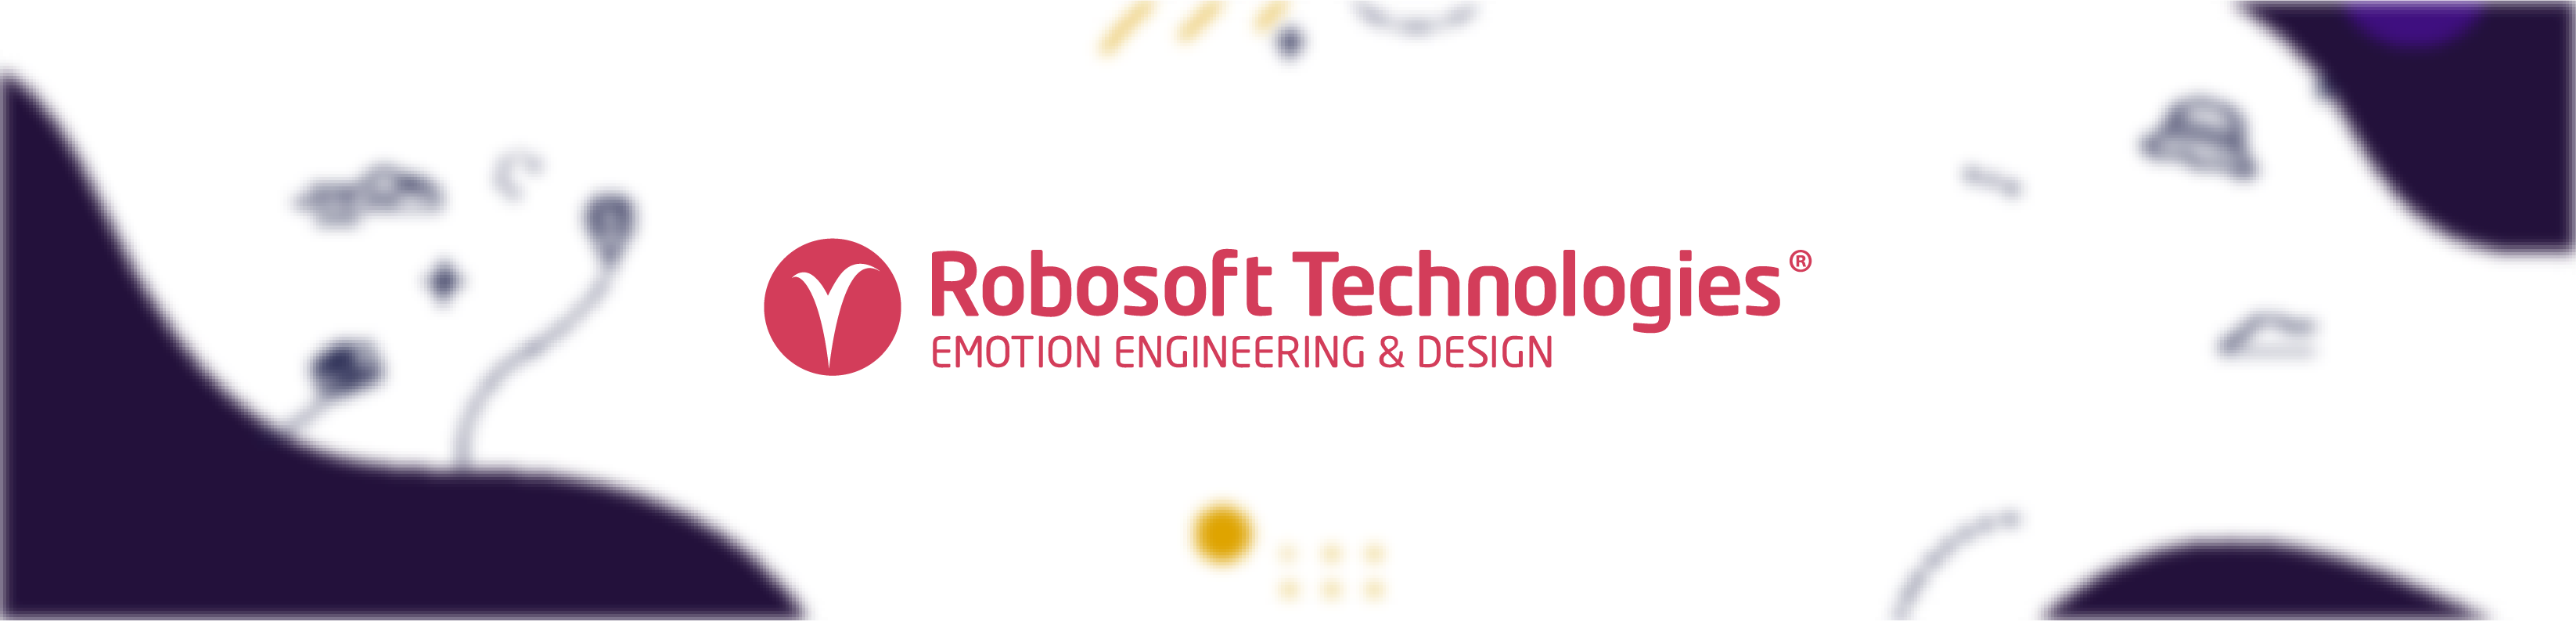 robosoft tech